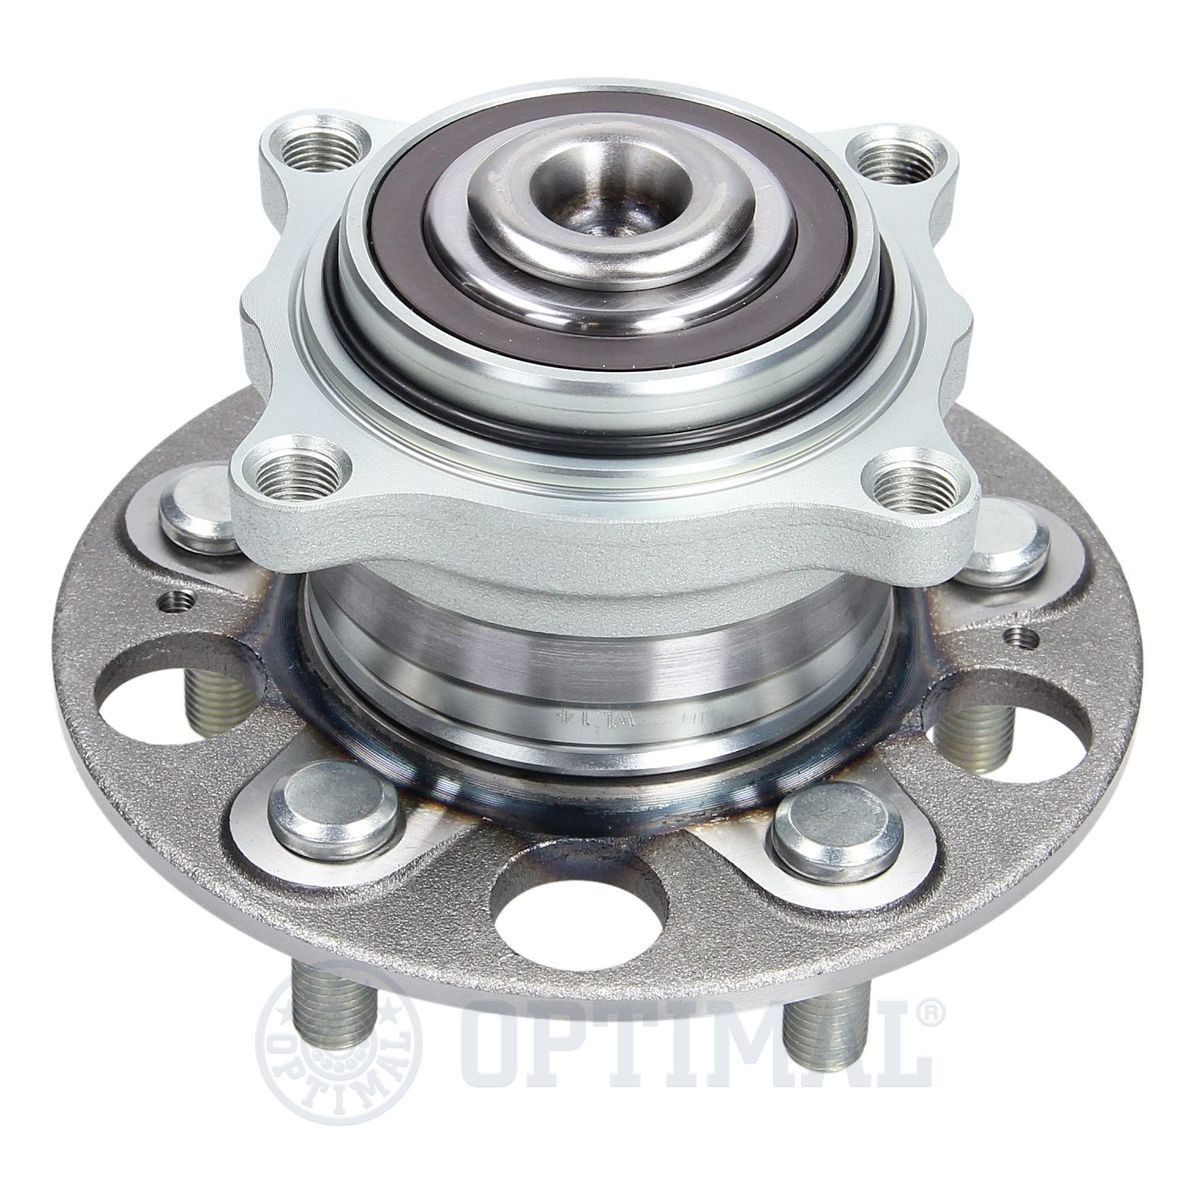 OPTIMAL 912303 Wheel bearing kit with integrated magnetic sensor ring, 152,5, 82 mm